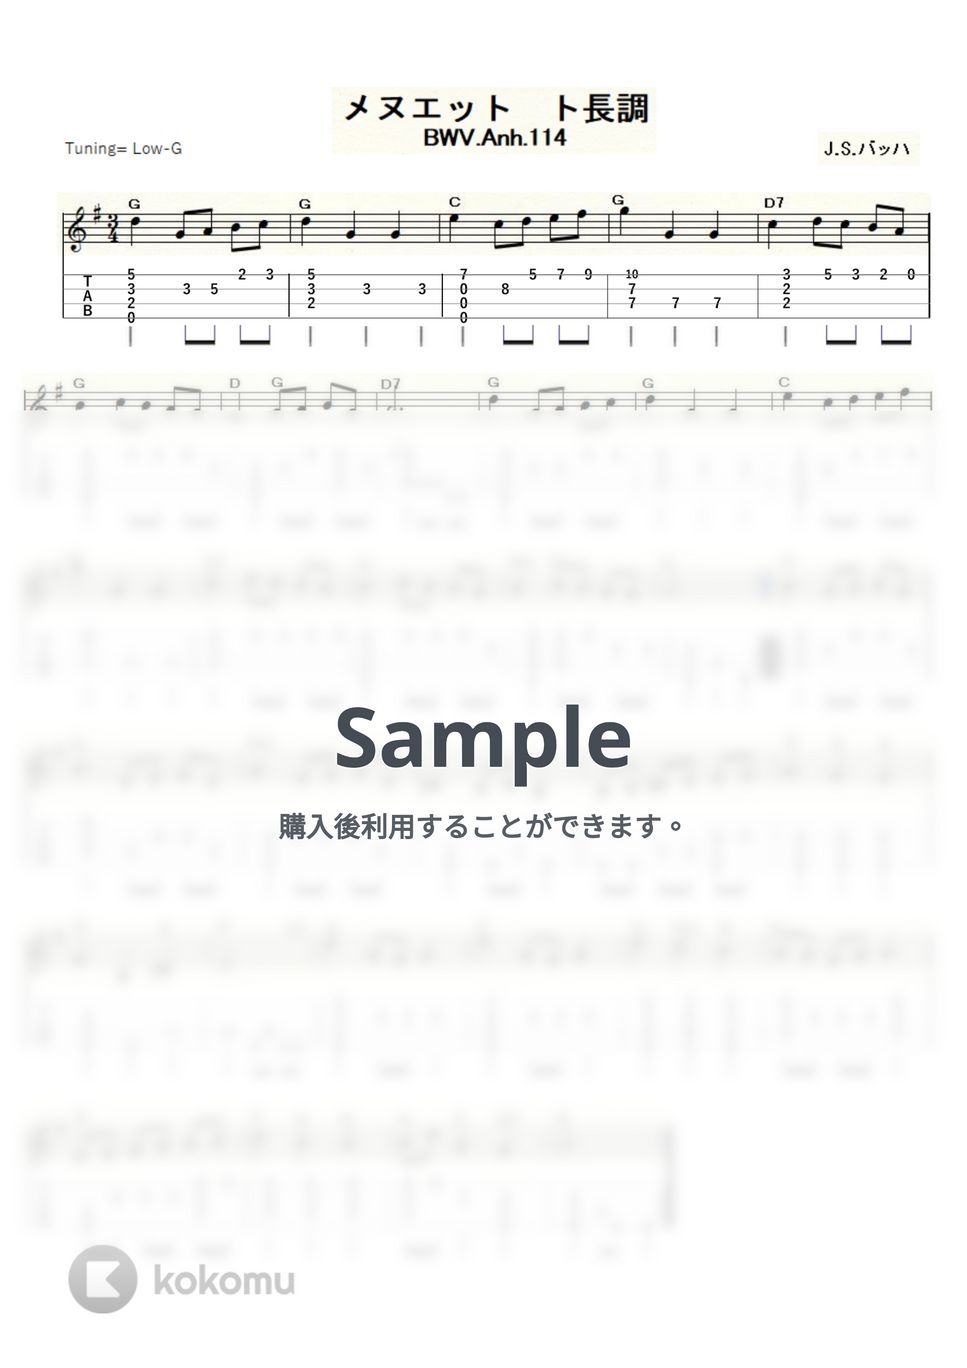 J.S.バッハ - メヌエット ト長調 (ｳｸﾚﾚｿﾛ / Low-G / 初～中級) by ukulelepapa